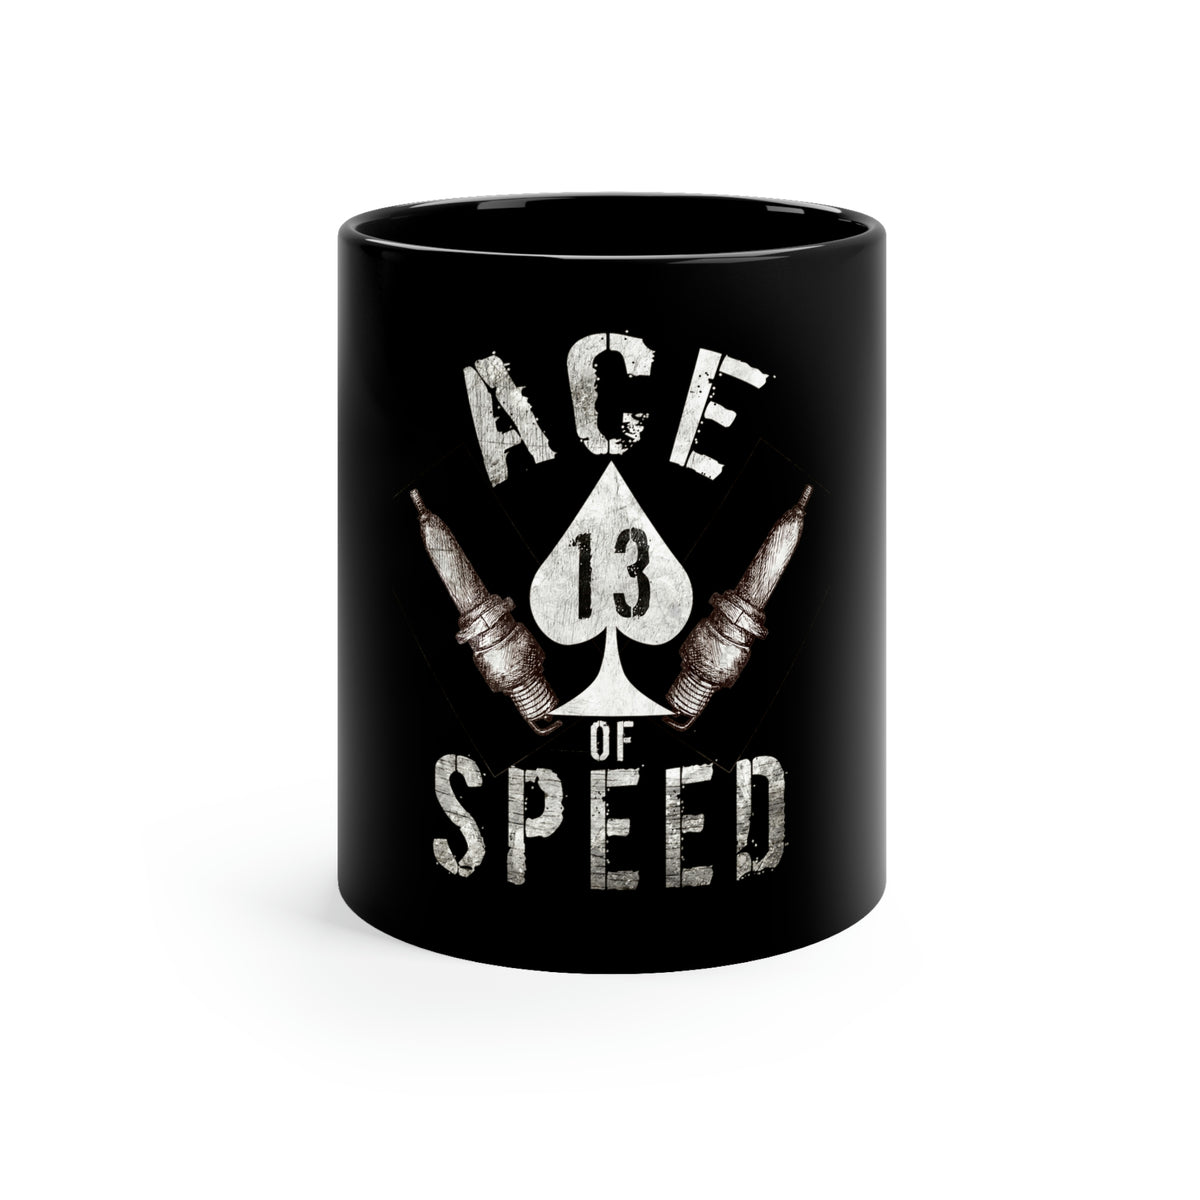 Ace of Speed - Black mug 11oz